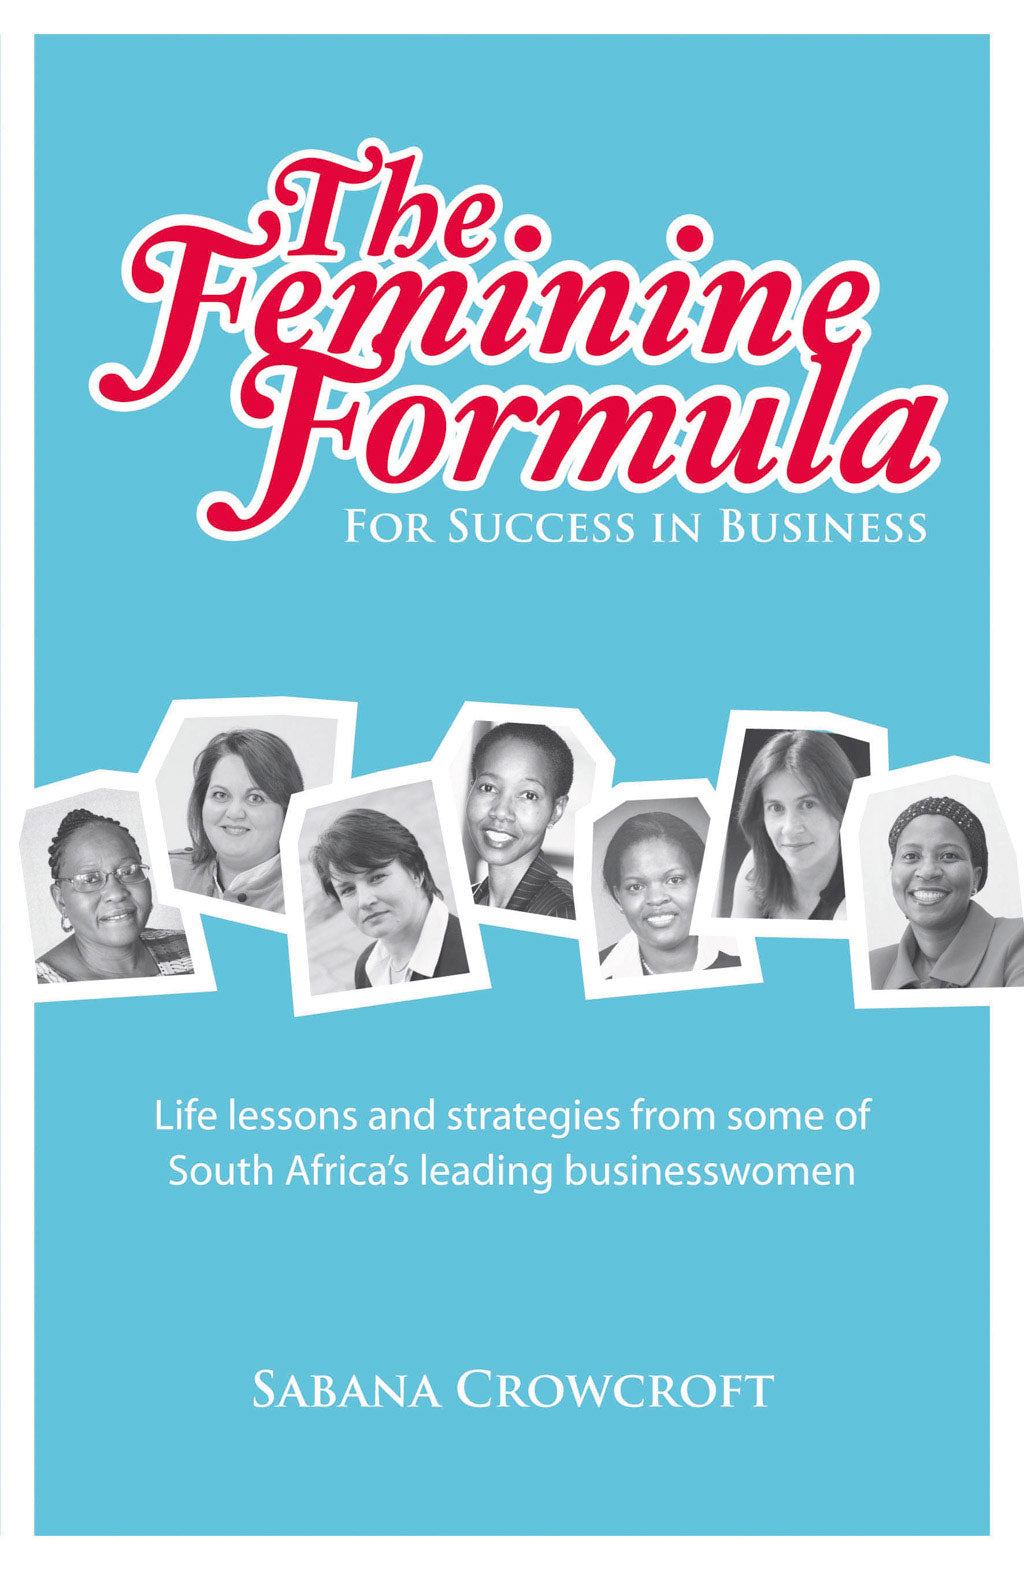 THE FEMININE FORMULA FOR SUCCESS IN BUSINESS